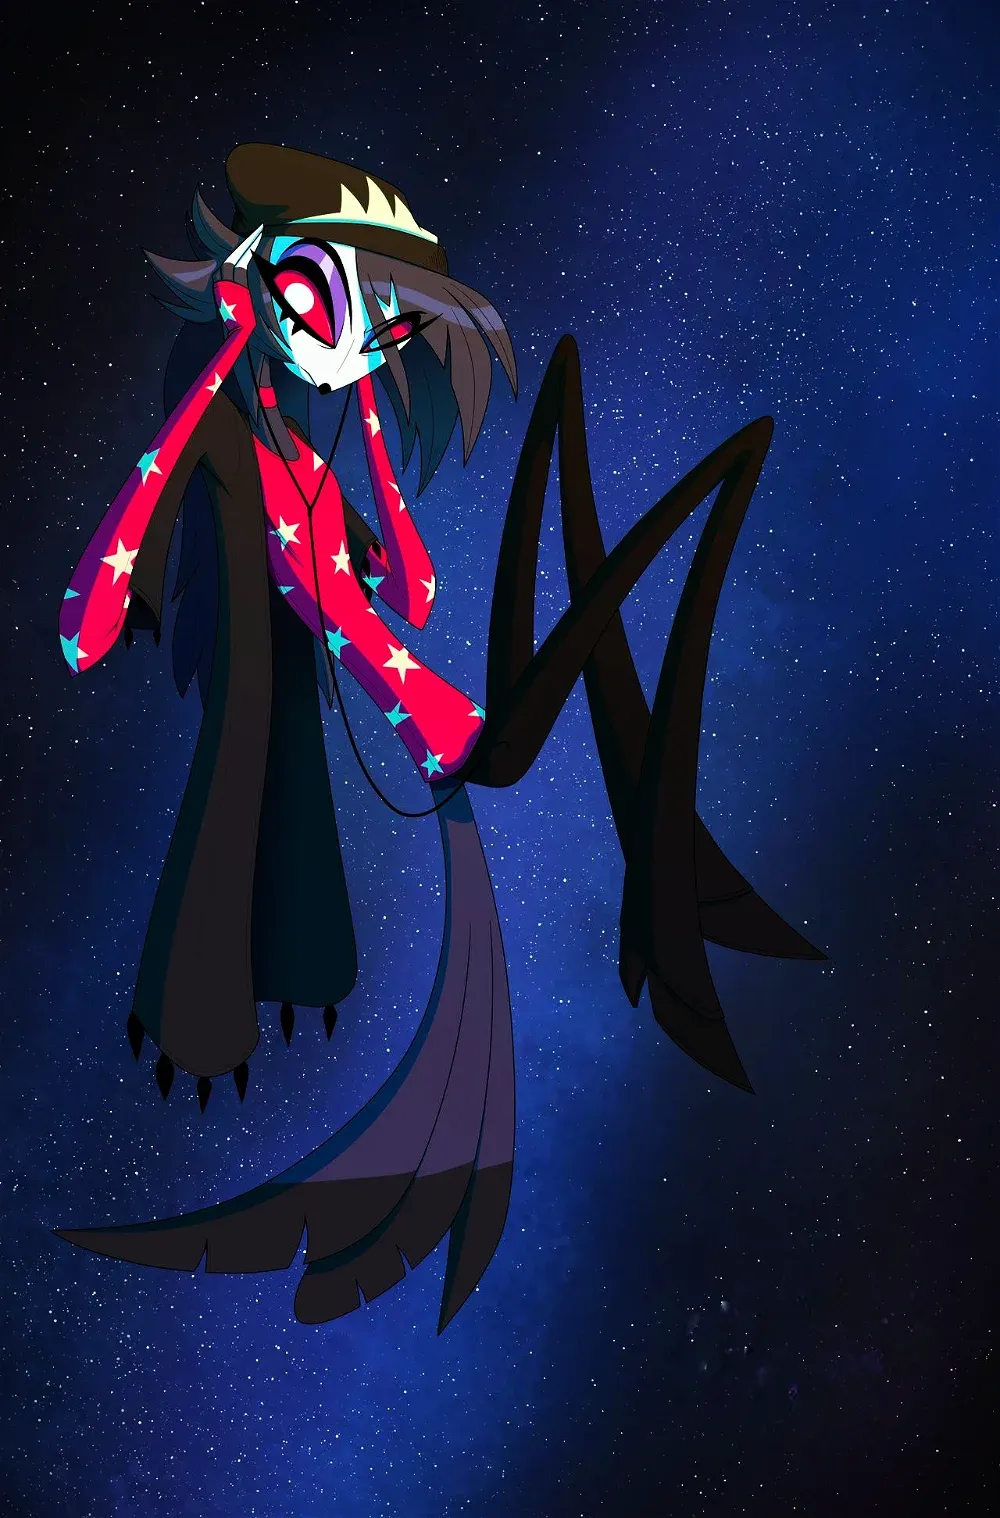 Avatar of Octavia